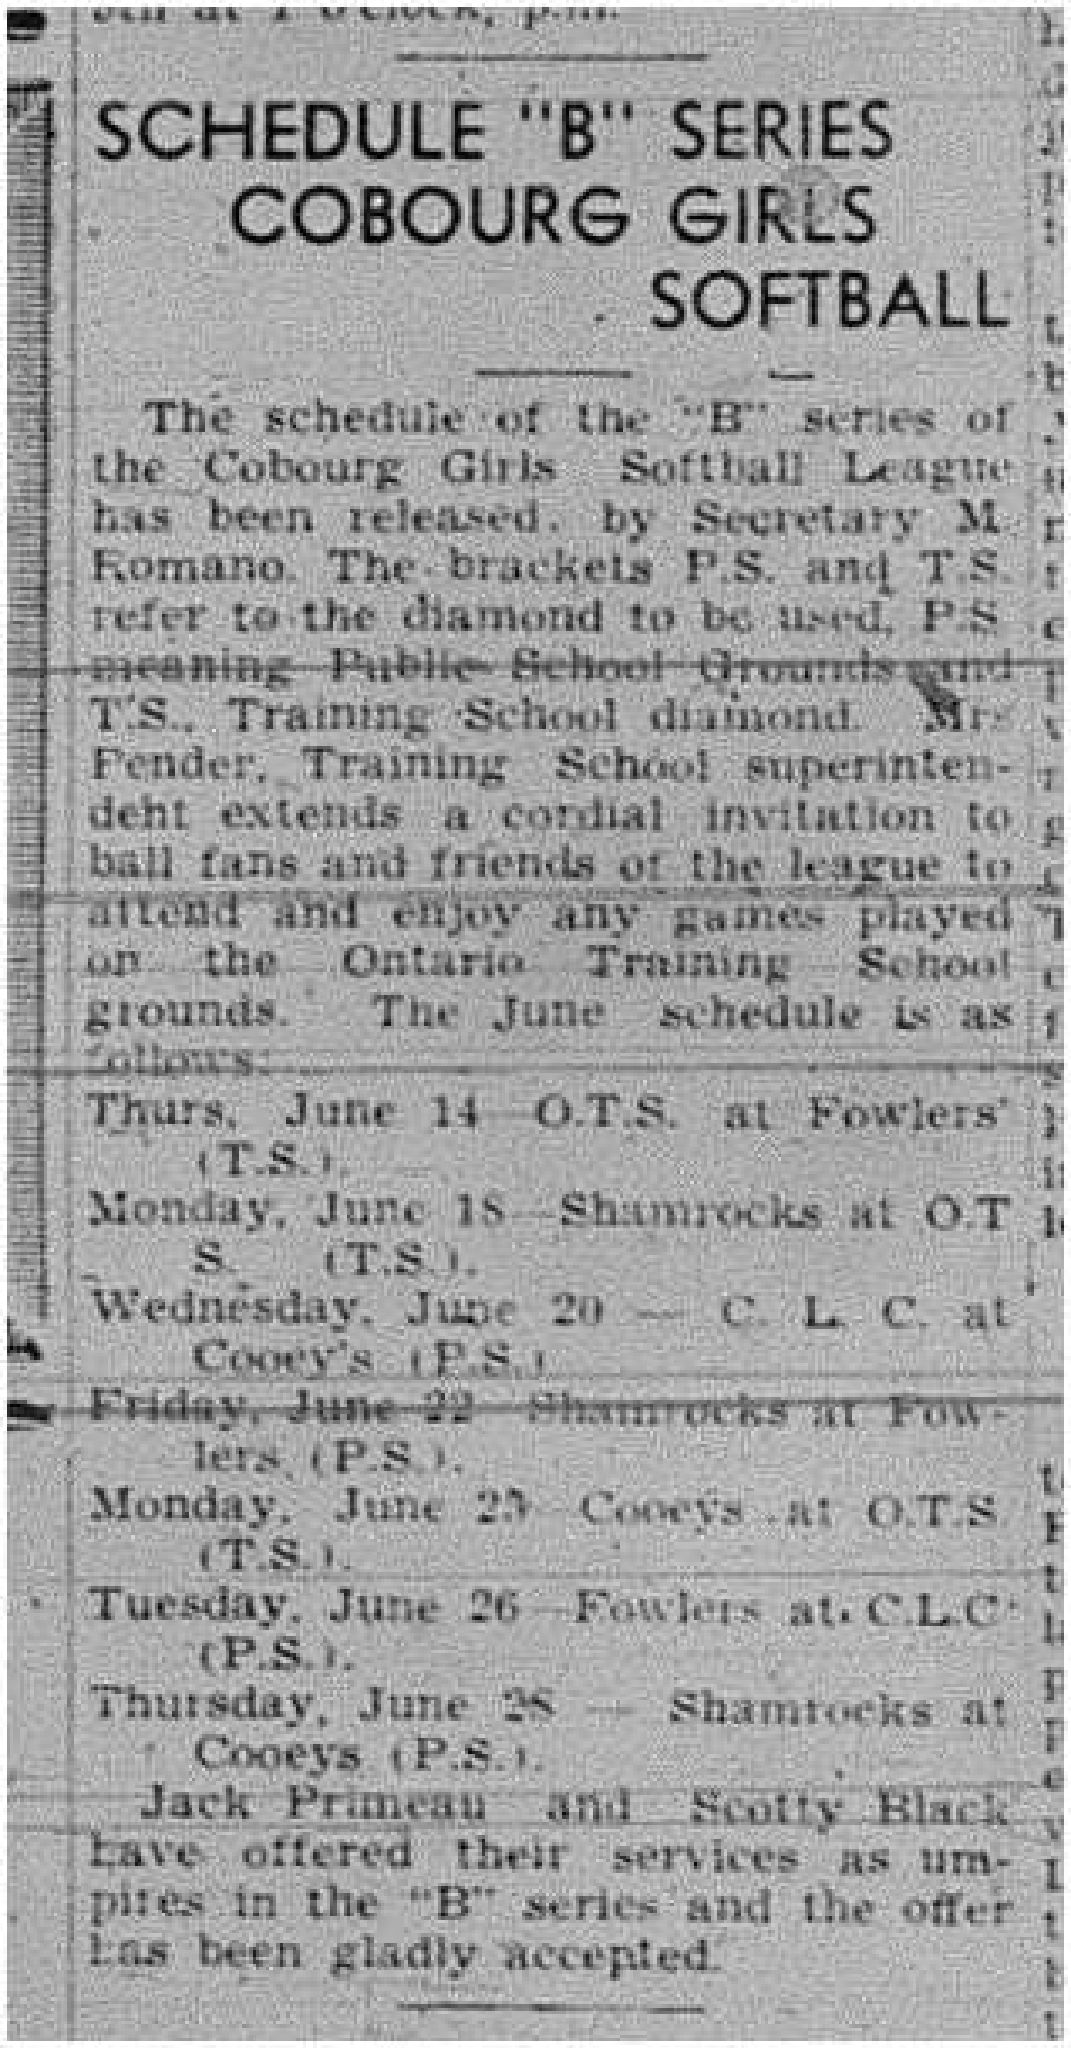 1945-06-14 Softball - Cobourg Girls Softball League